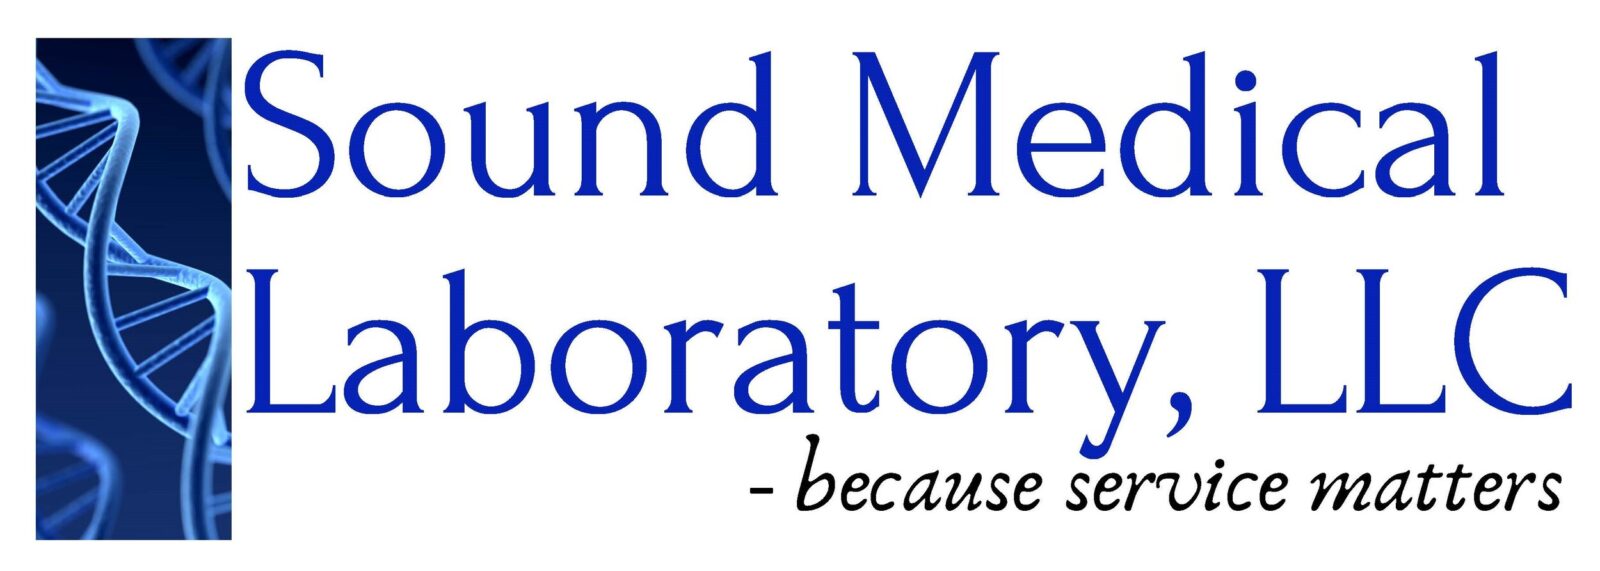 Sound Medical Laboratory LLC